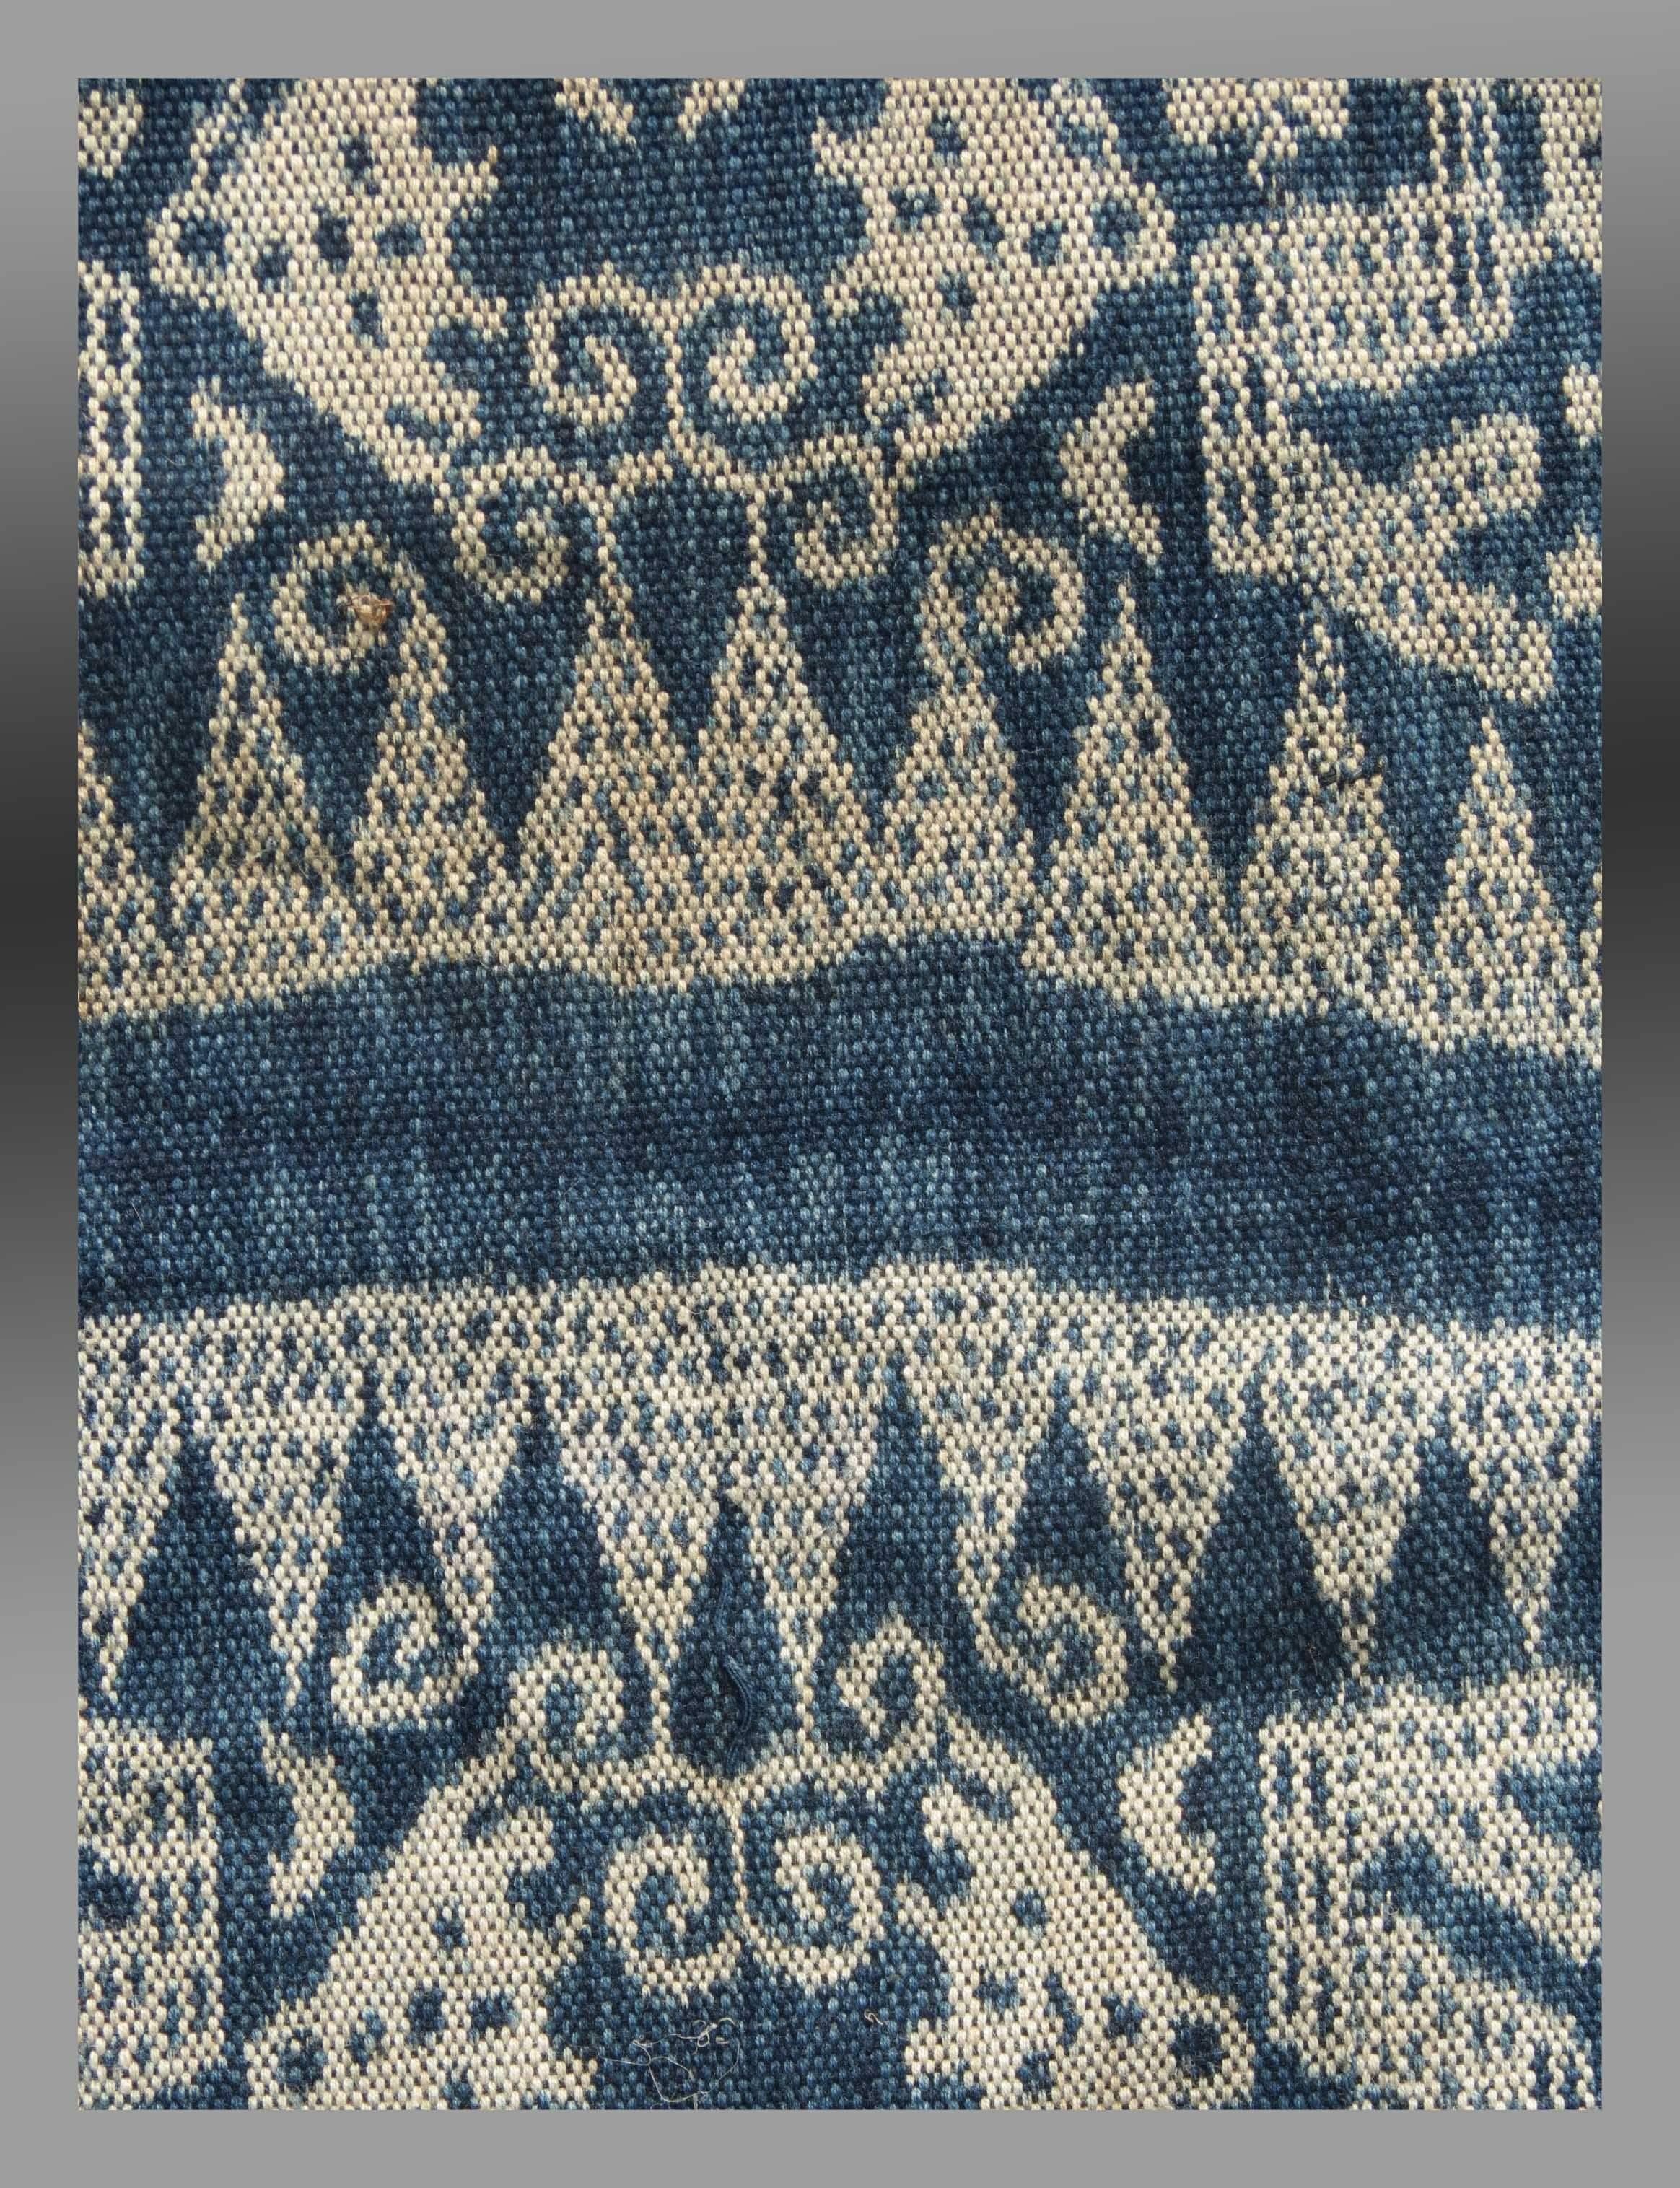 West Timor Tribal Cotton Ikat Textile, Decorative/Unusual, 1960s-1970s 2